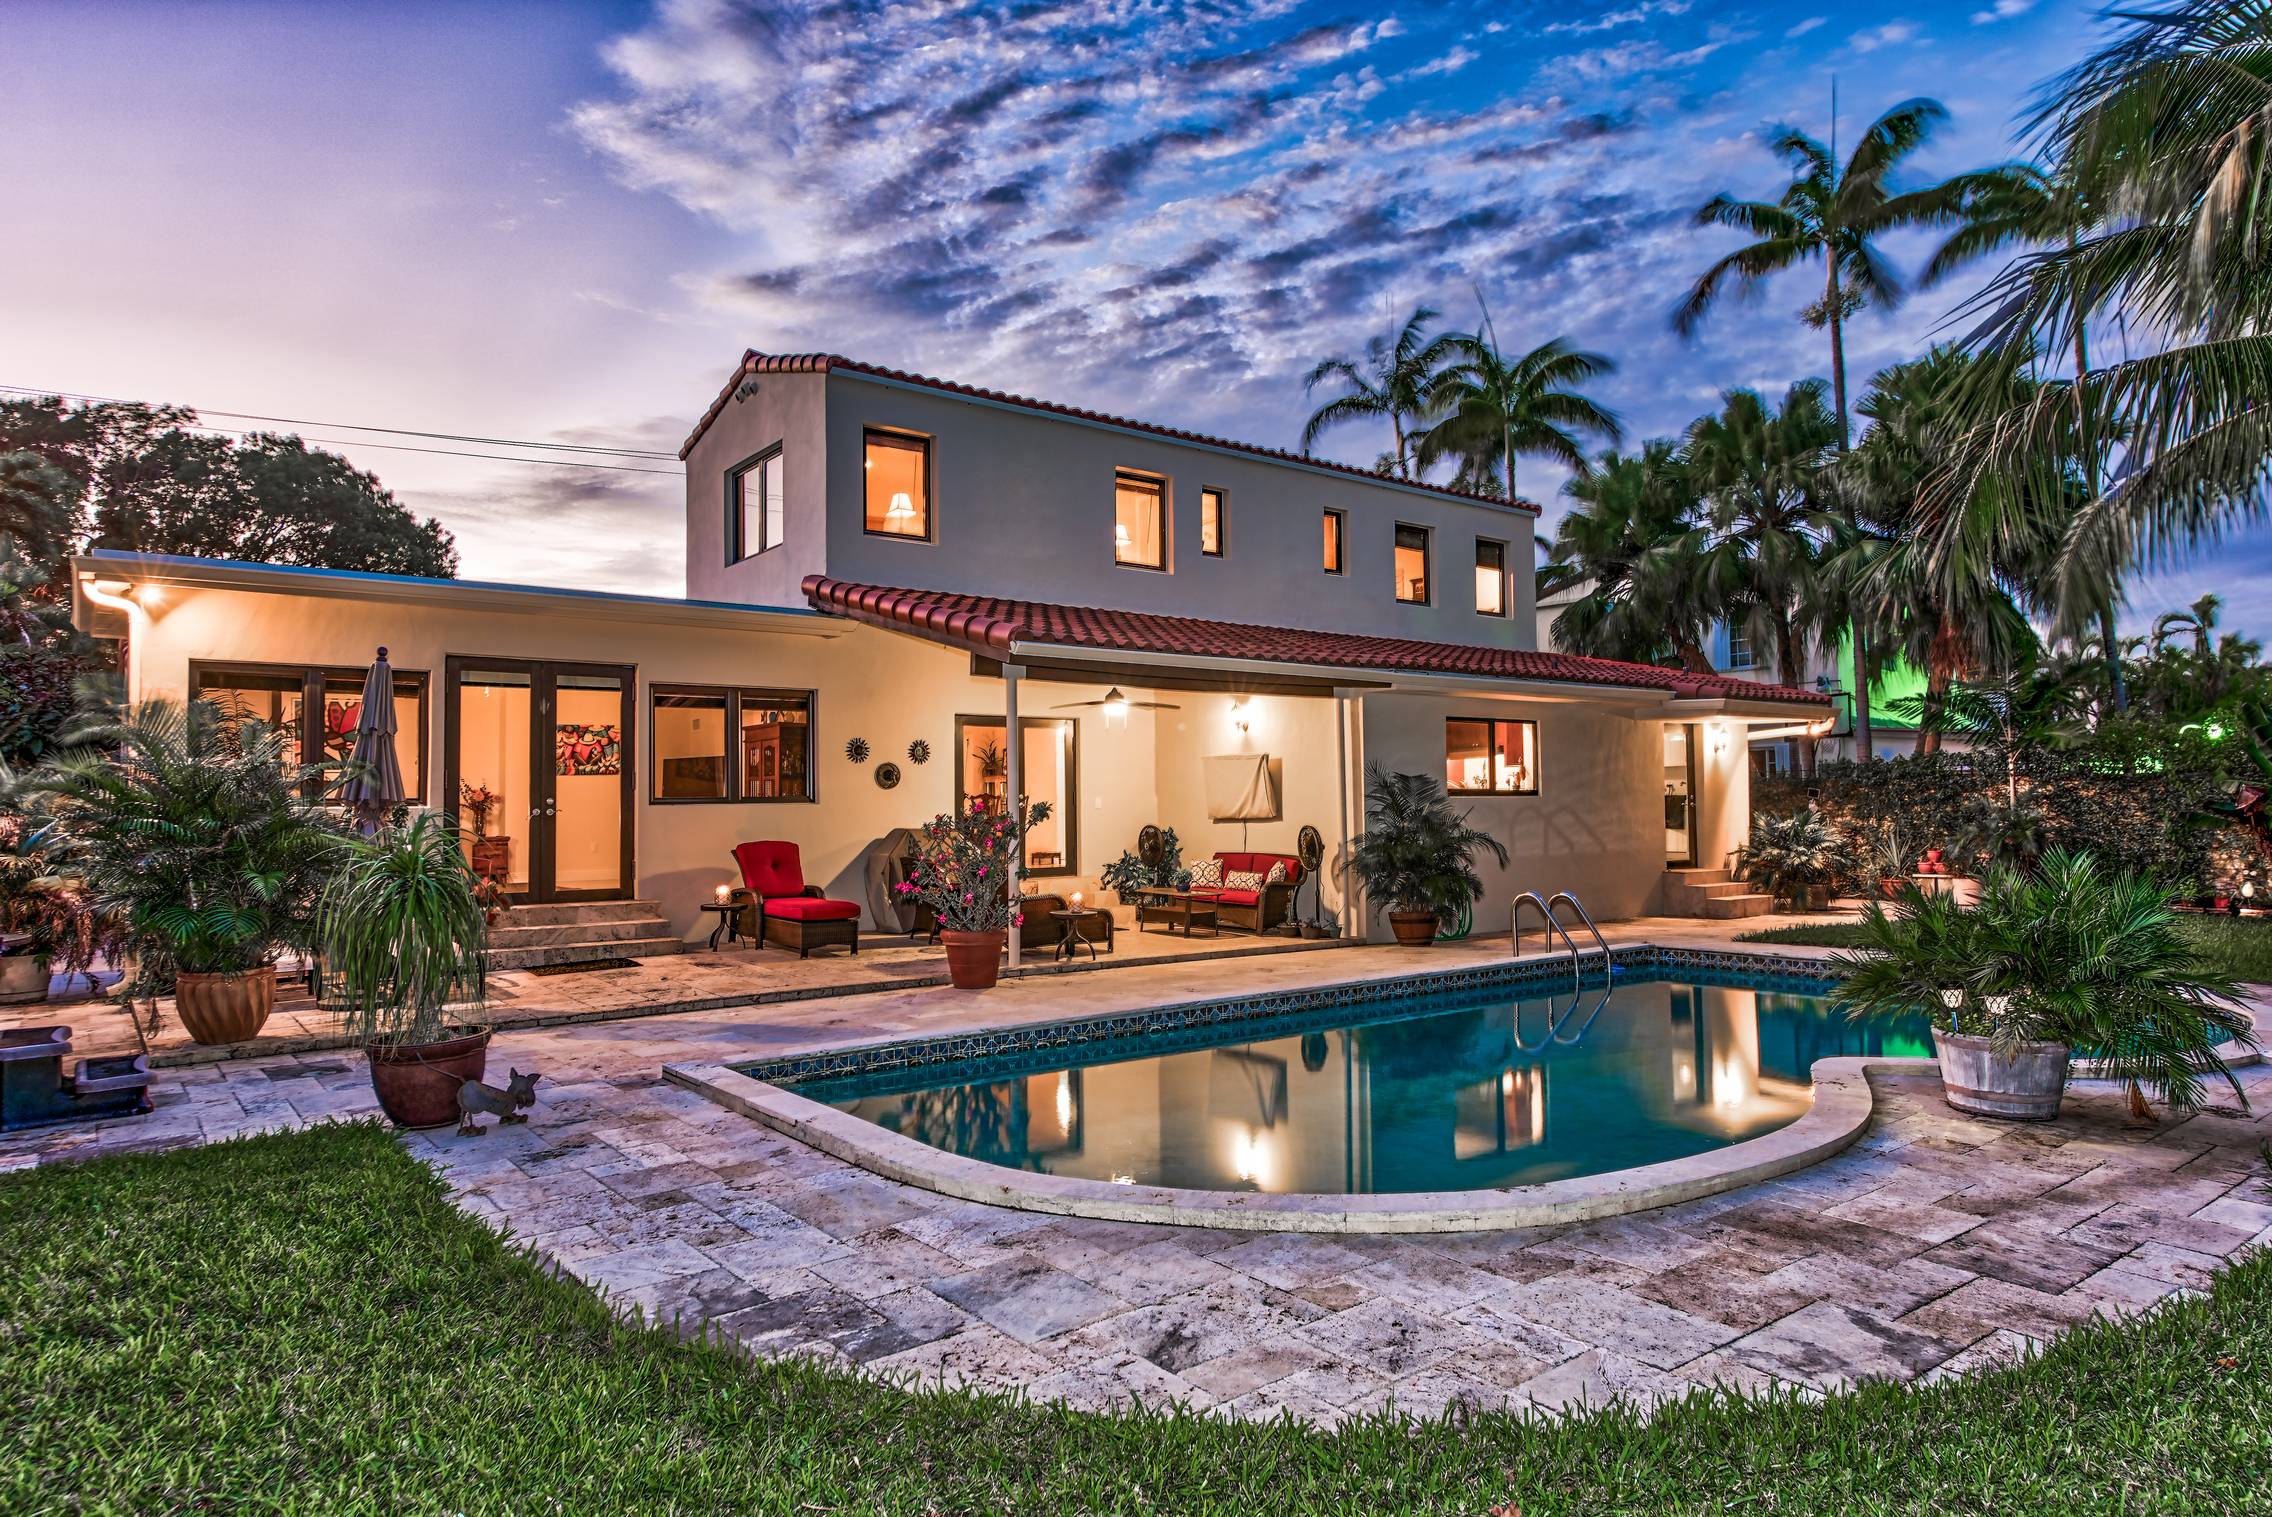 Getting the Right Miami Real Estate Home.